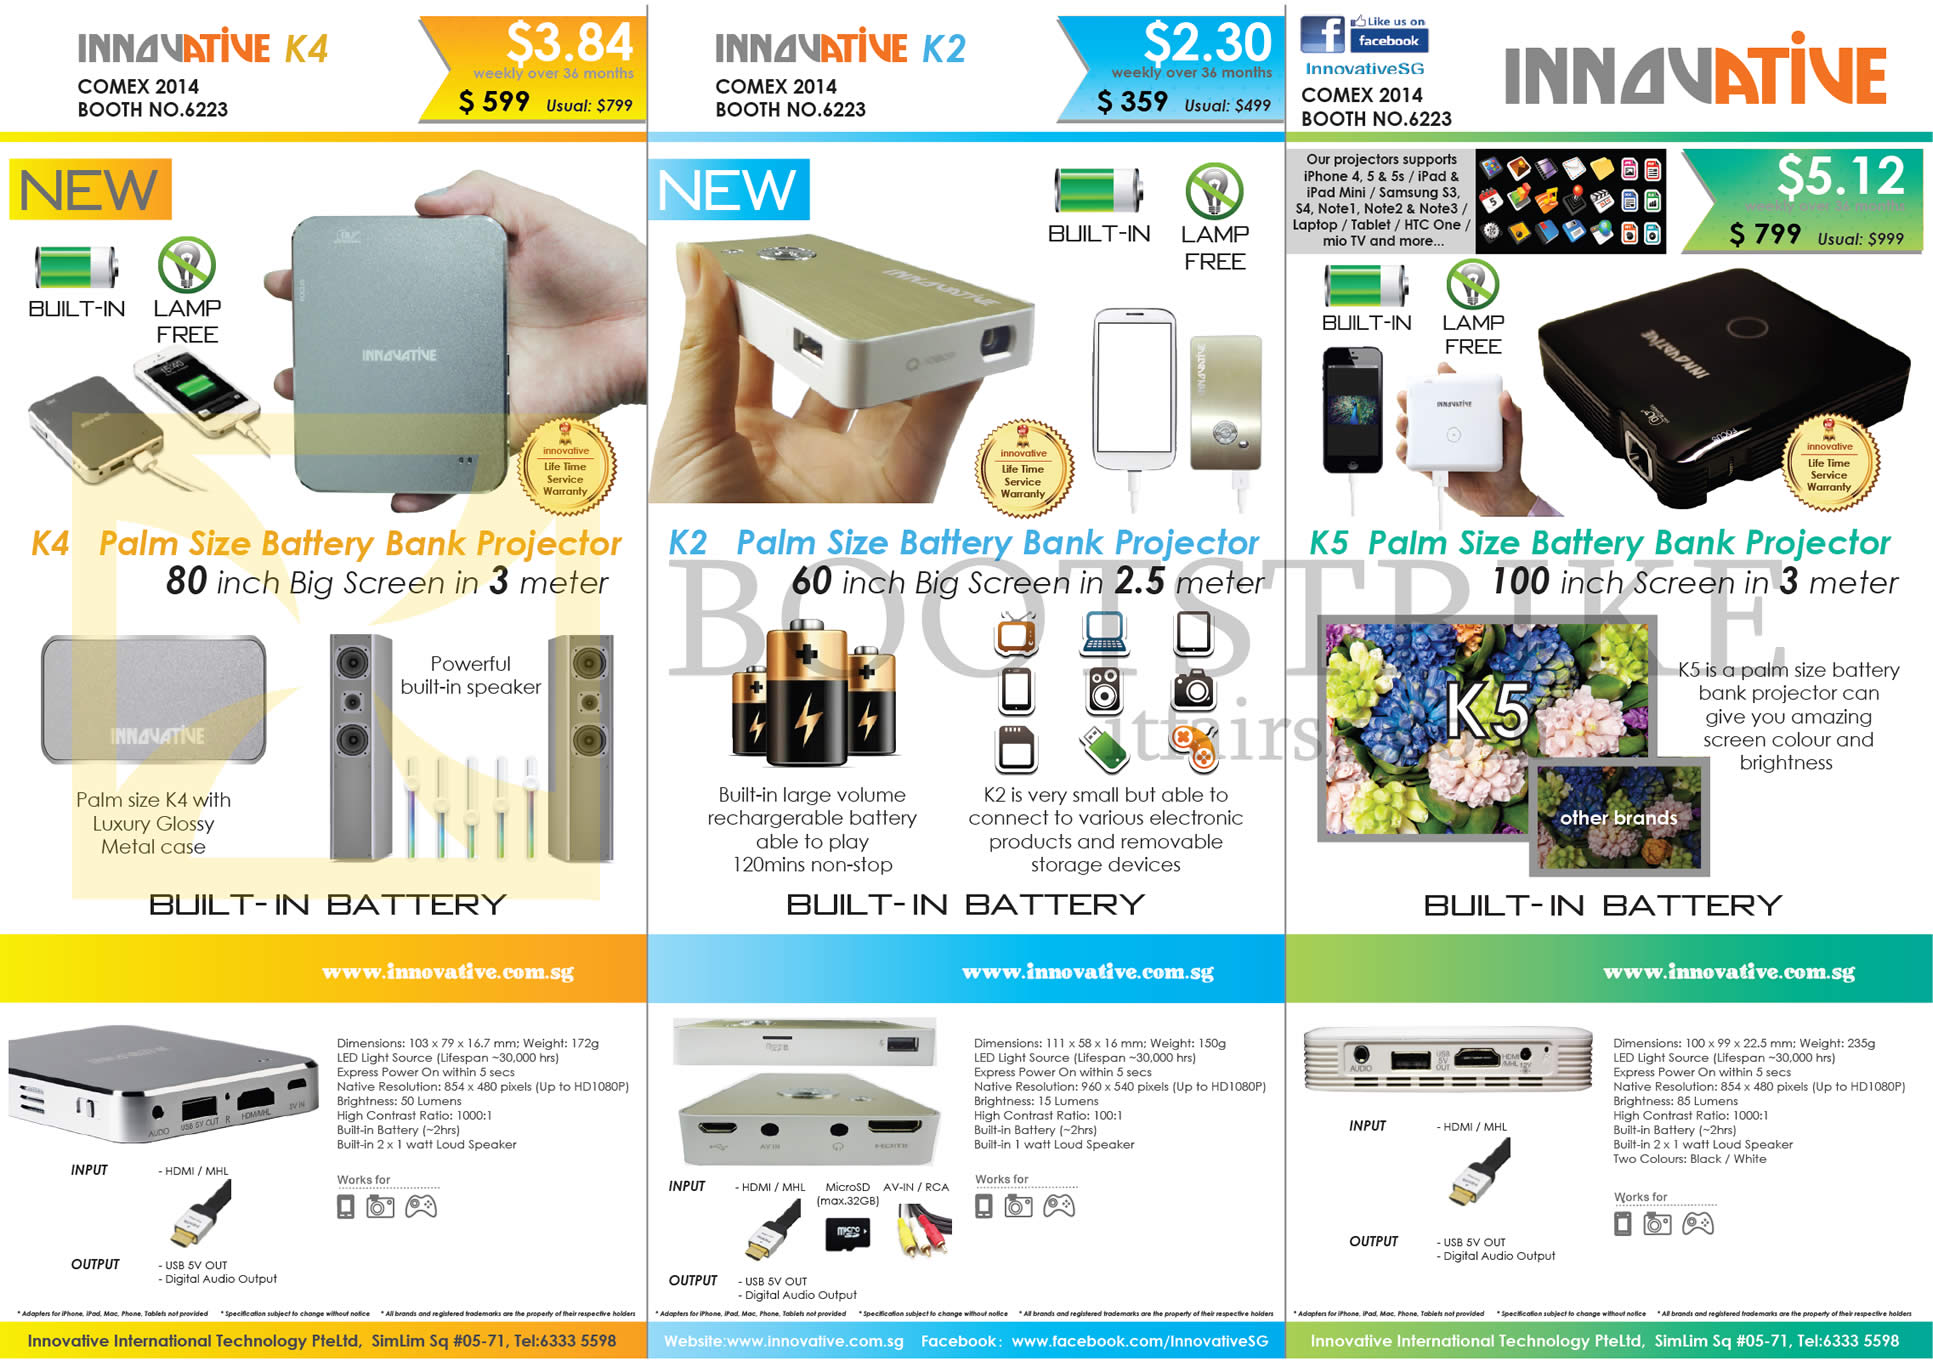 COMEX 2014 price list image brochure of Innovative K4, K2, K5 Battery Bank Projector